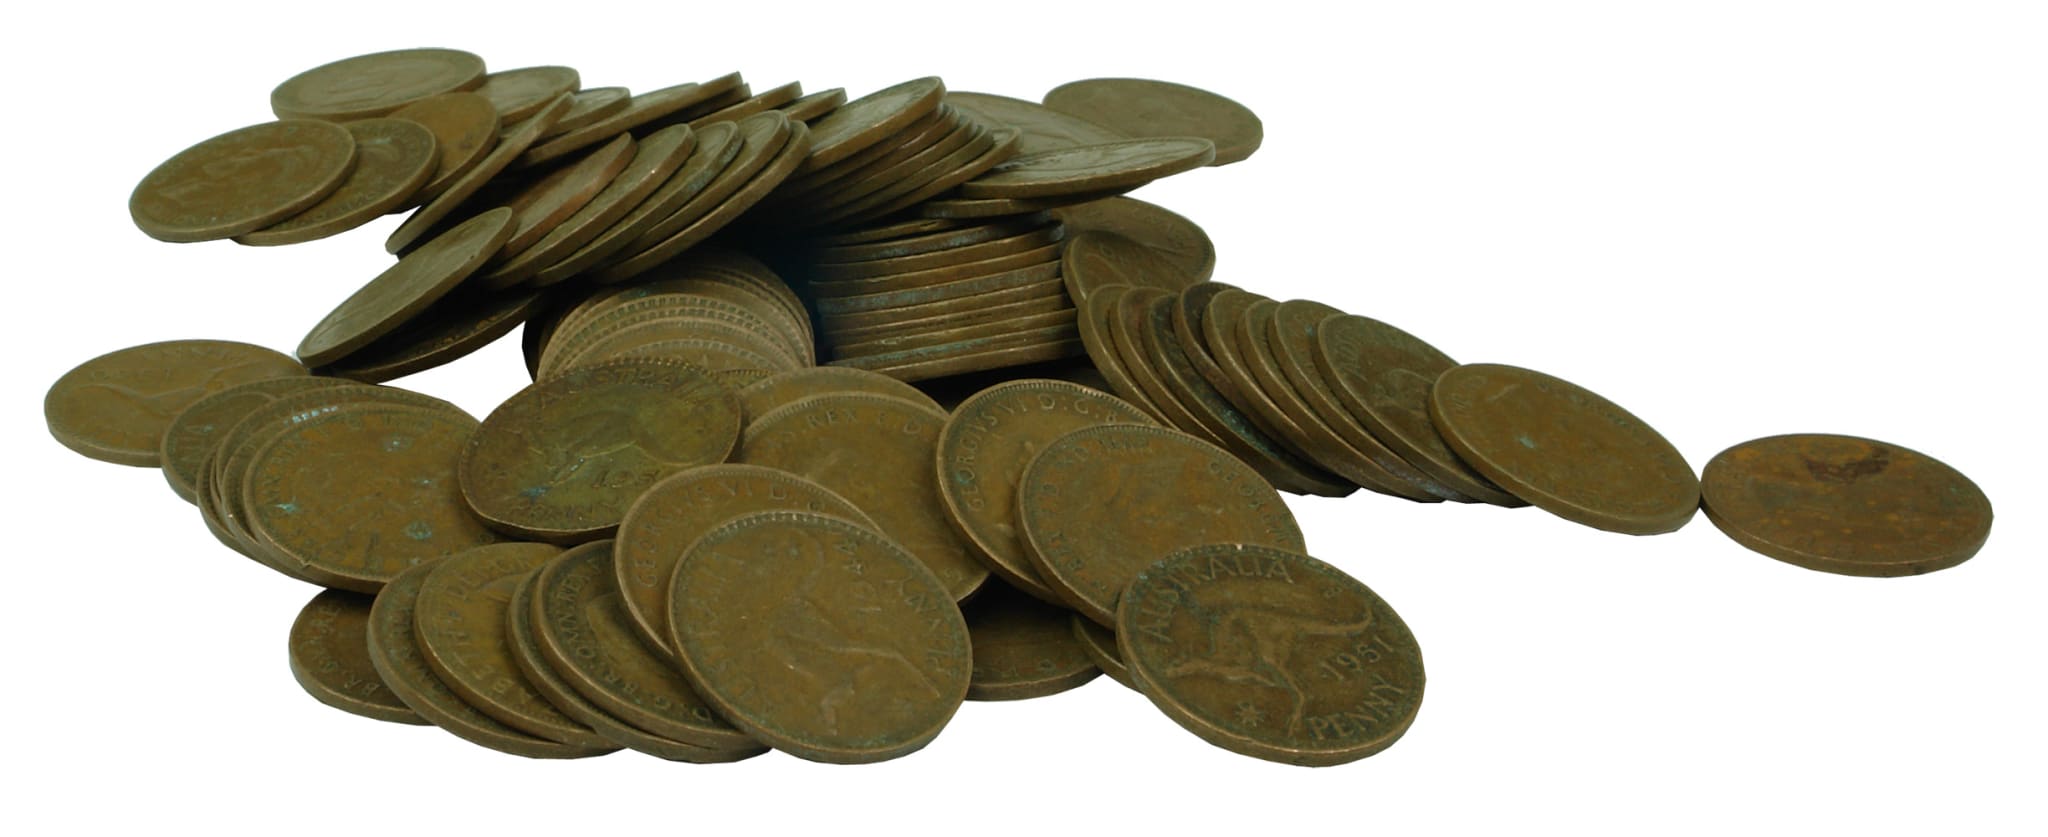 Kilogram Australian Copper Pennies